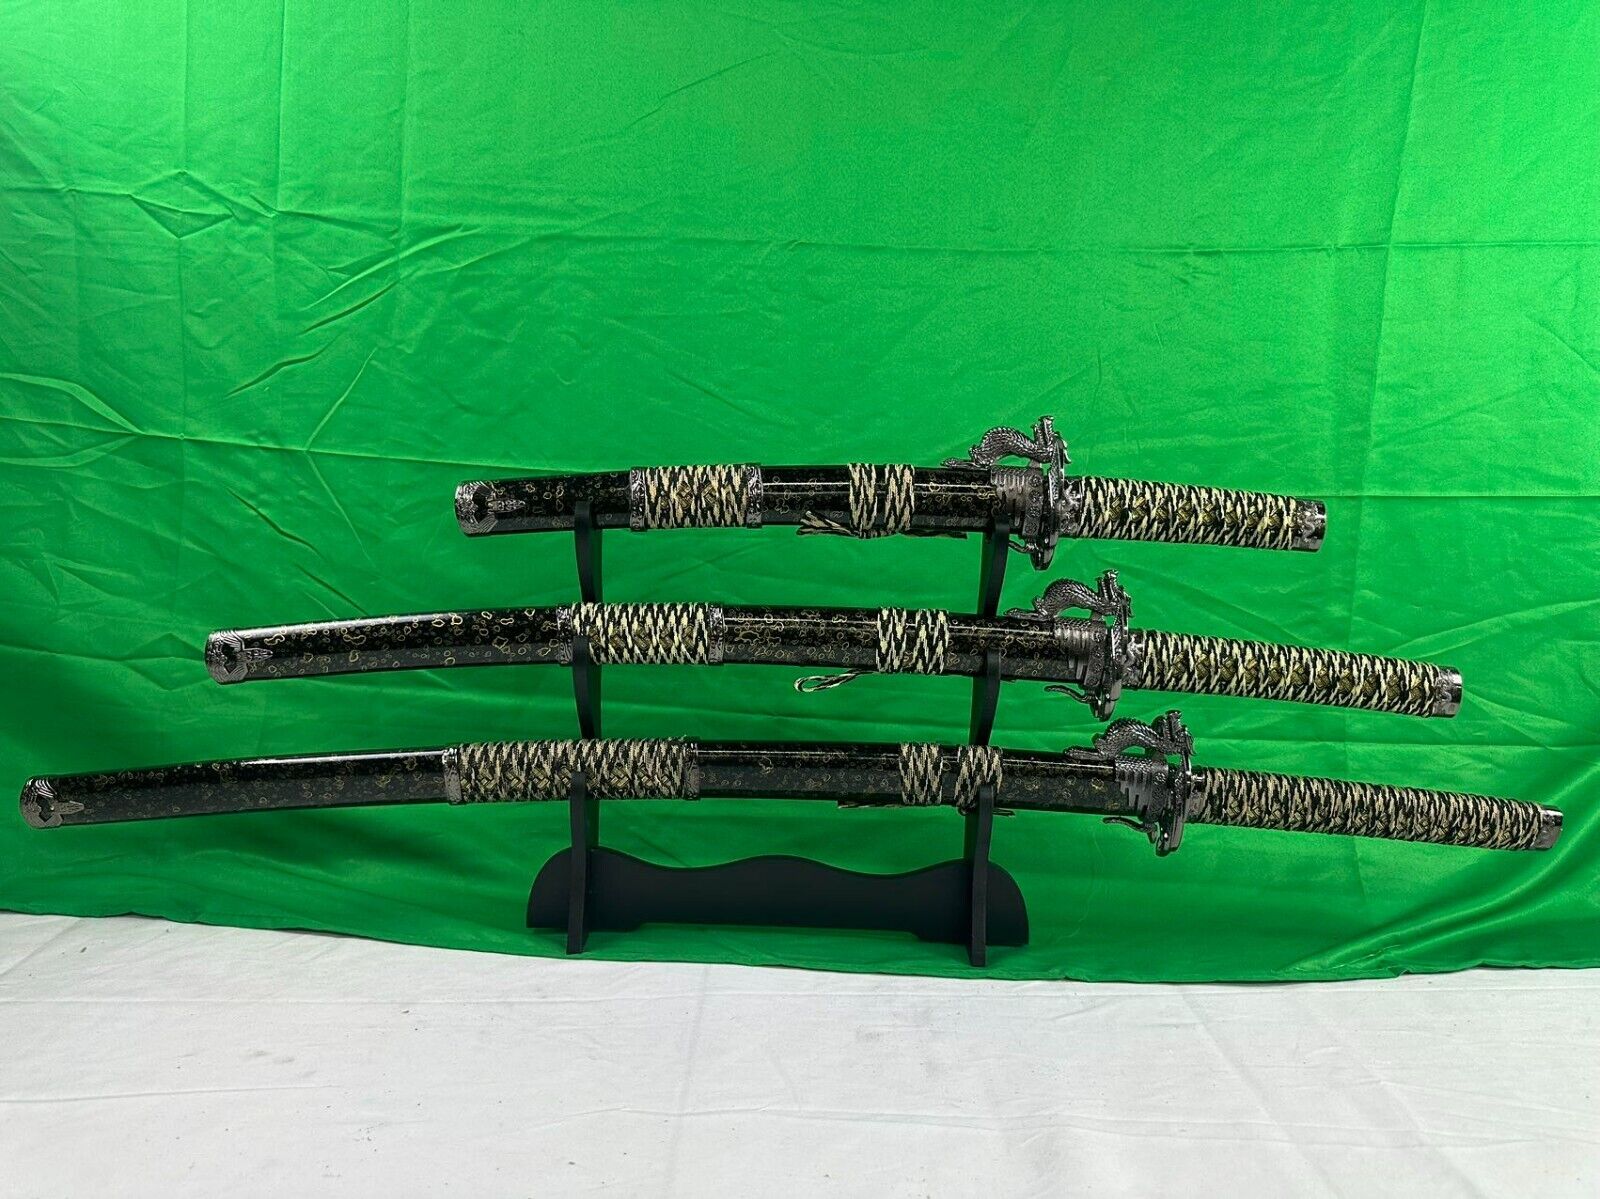 3pc Red Japanese Samurai Katana Sword Set w/ Stand Blade Weapon Collection Sharp